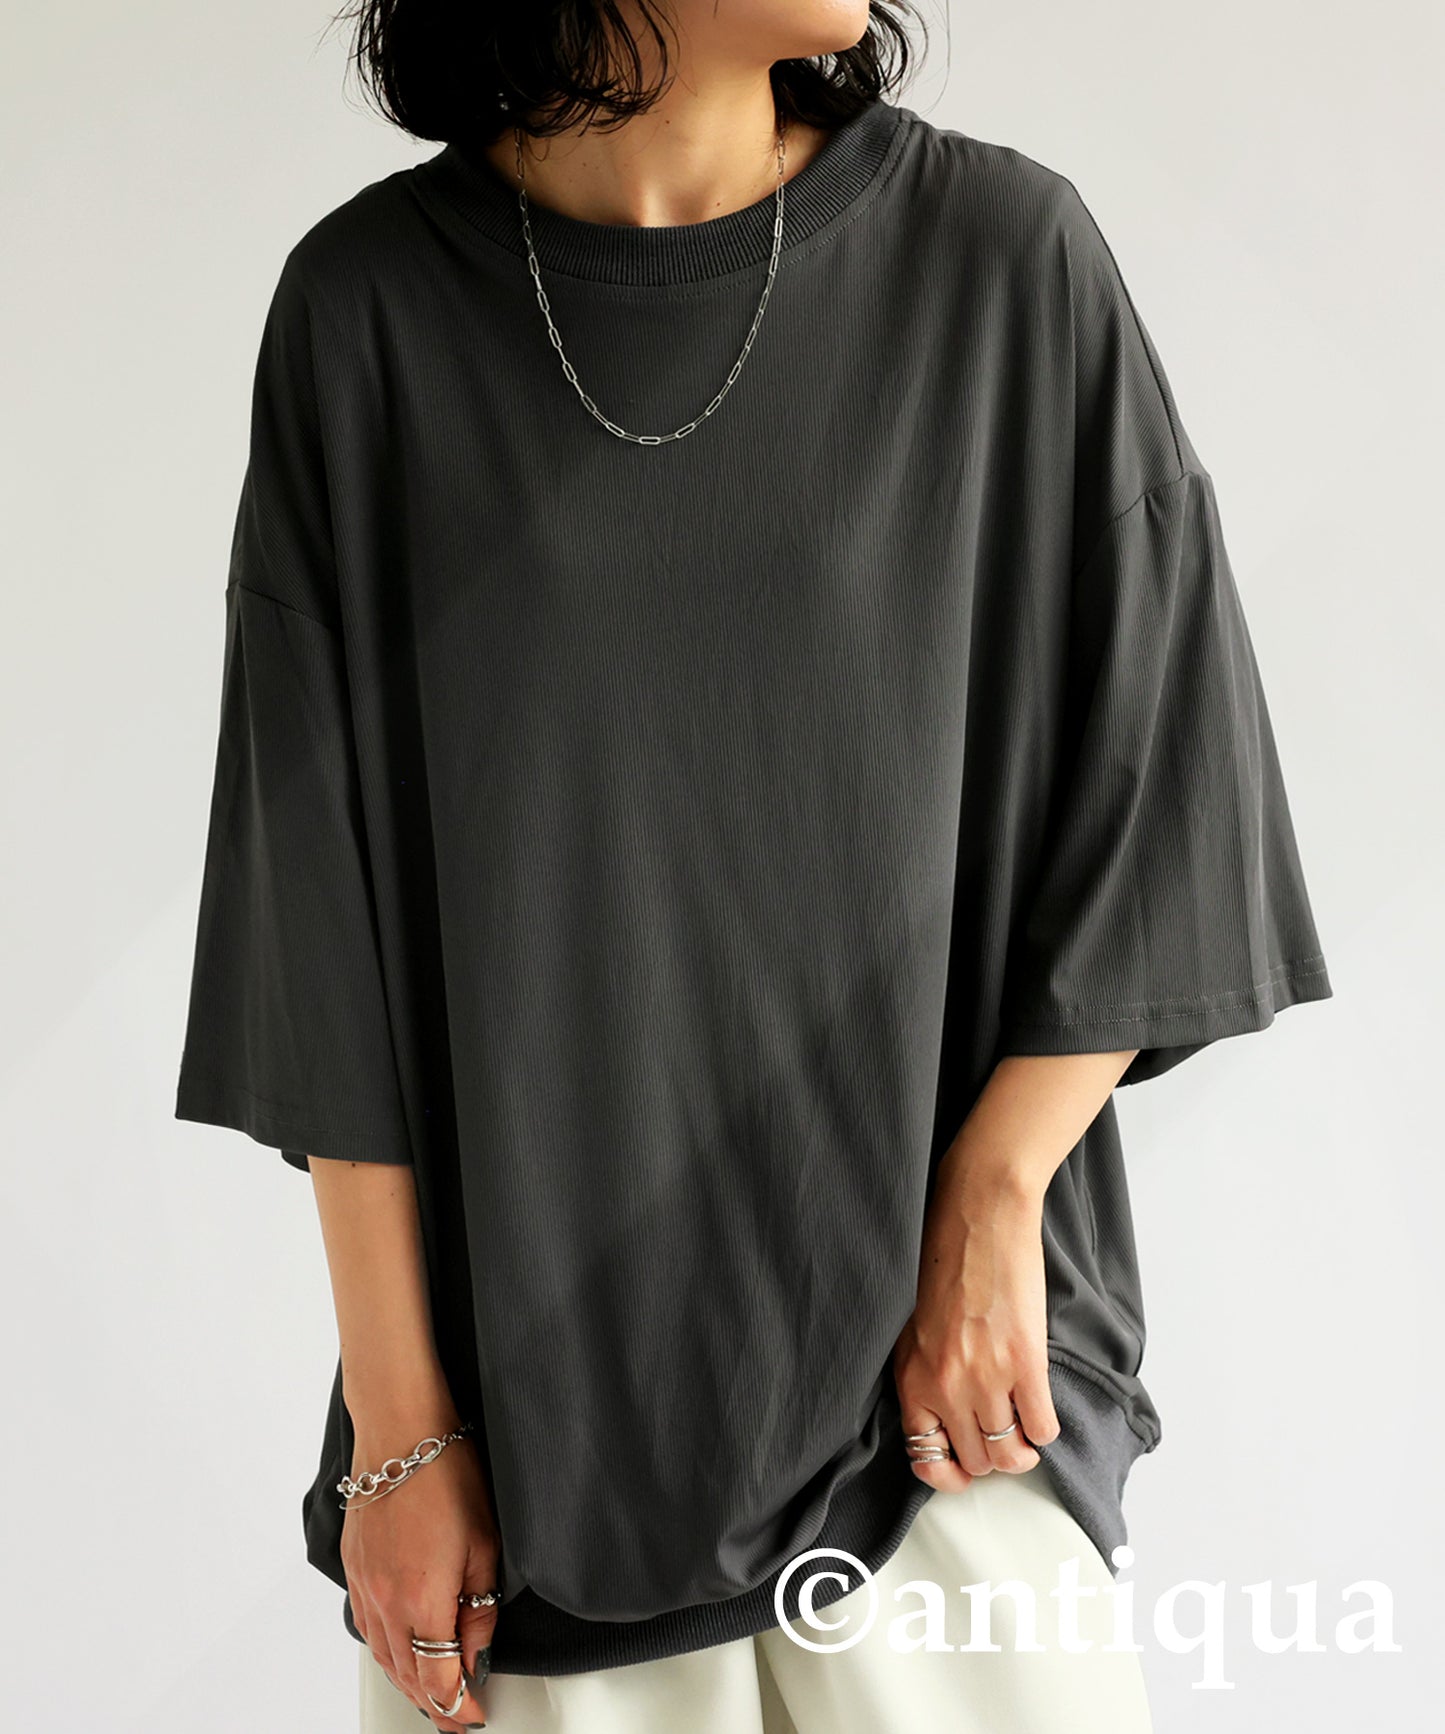 Uv Cut / Cool Touch Fabric T -Shirt Ladies